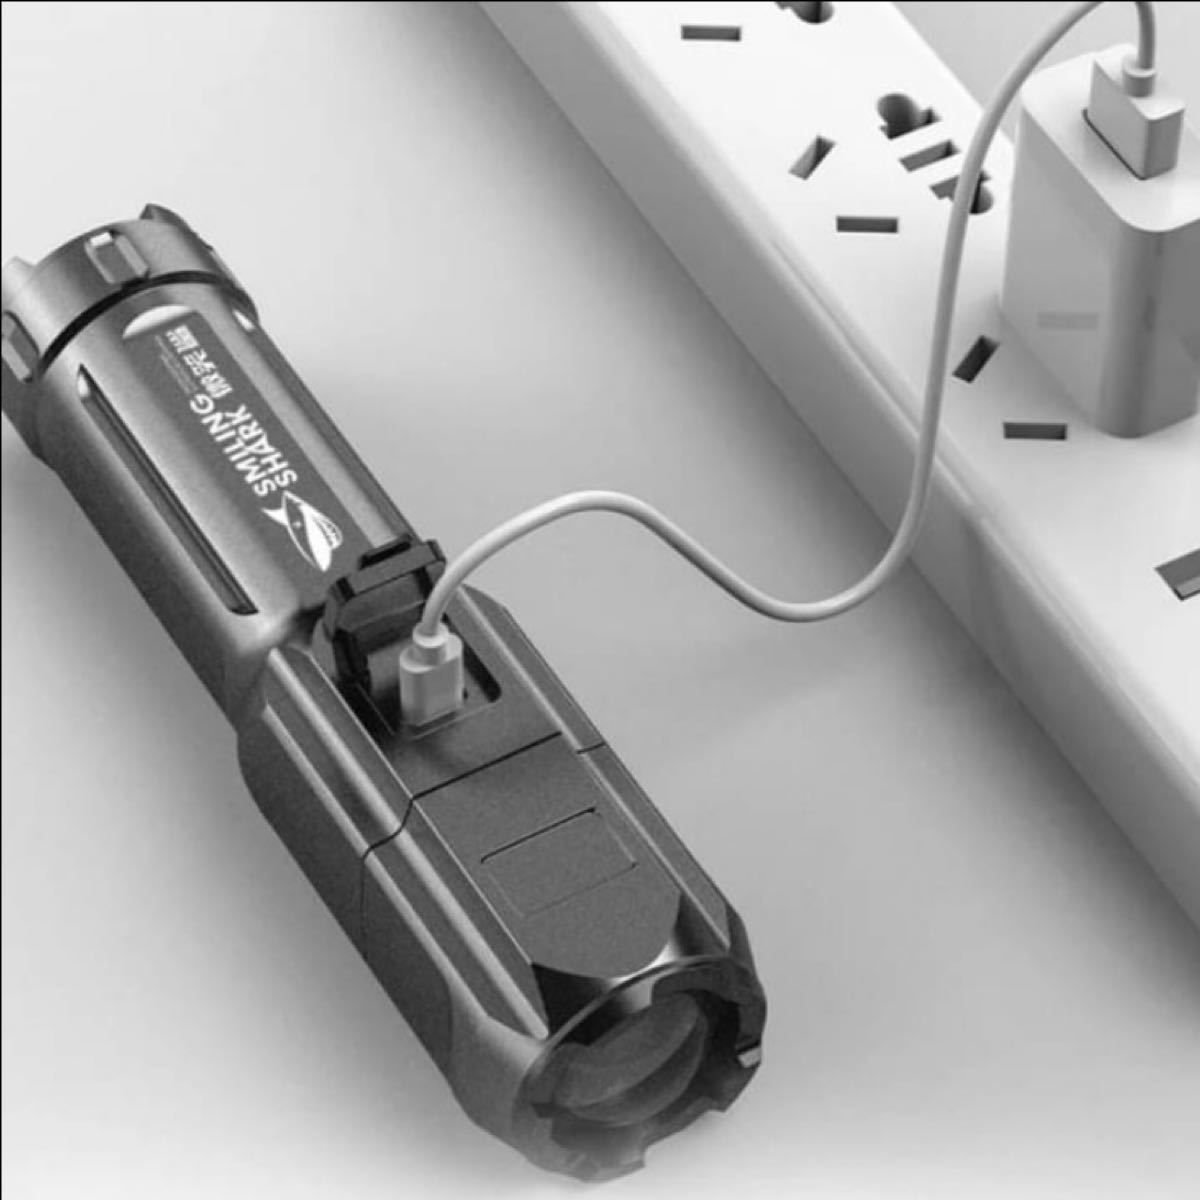 LEDライト　ズーミングライト　超小型　USB充電式　爆光　強力照射　懐中電灯